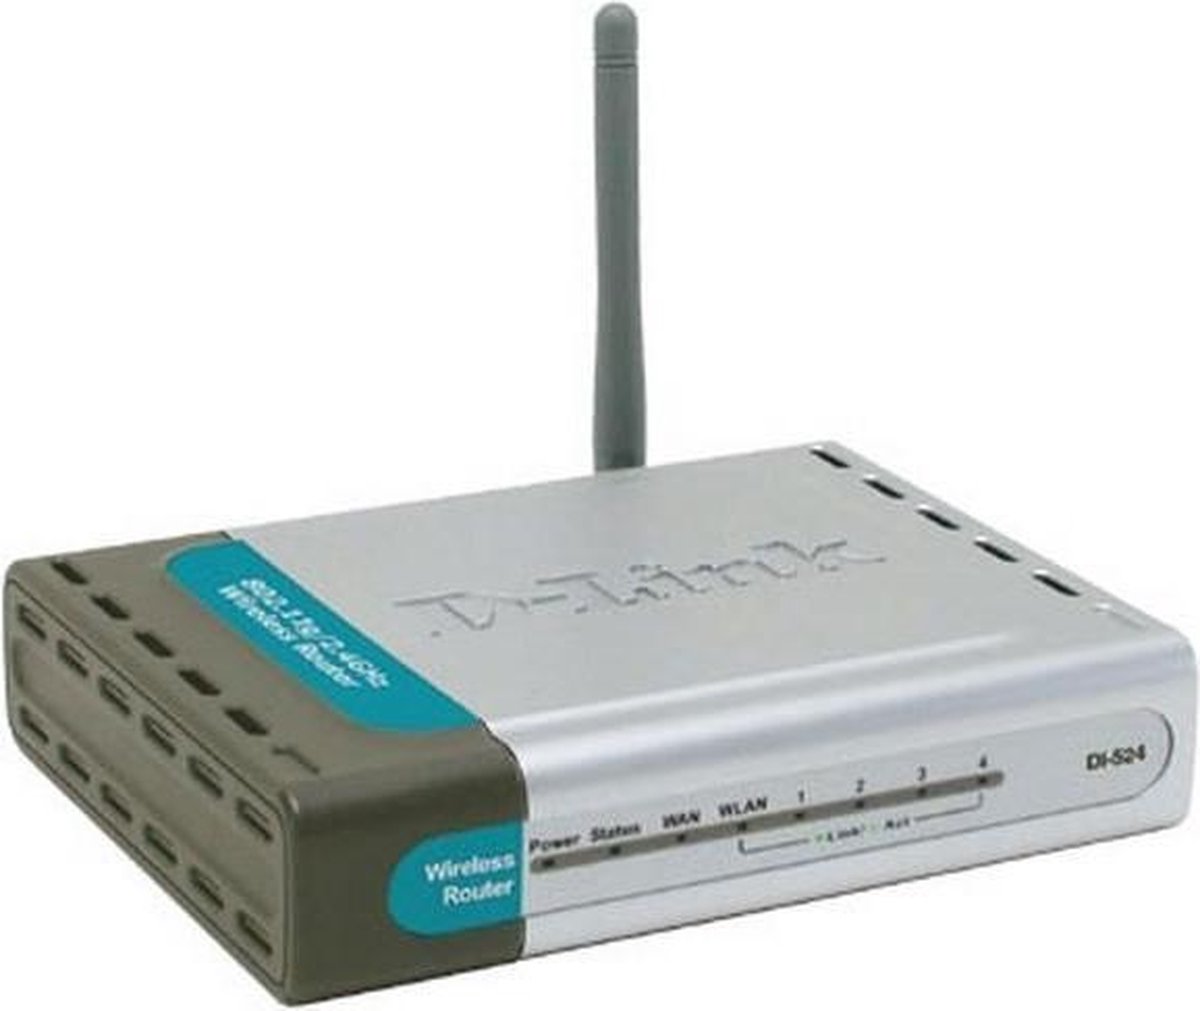 D-Link AirPlusTM G DI-524 Wireless Router | bol.com